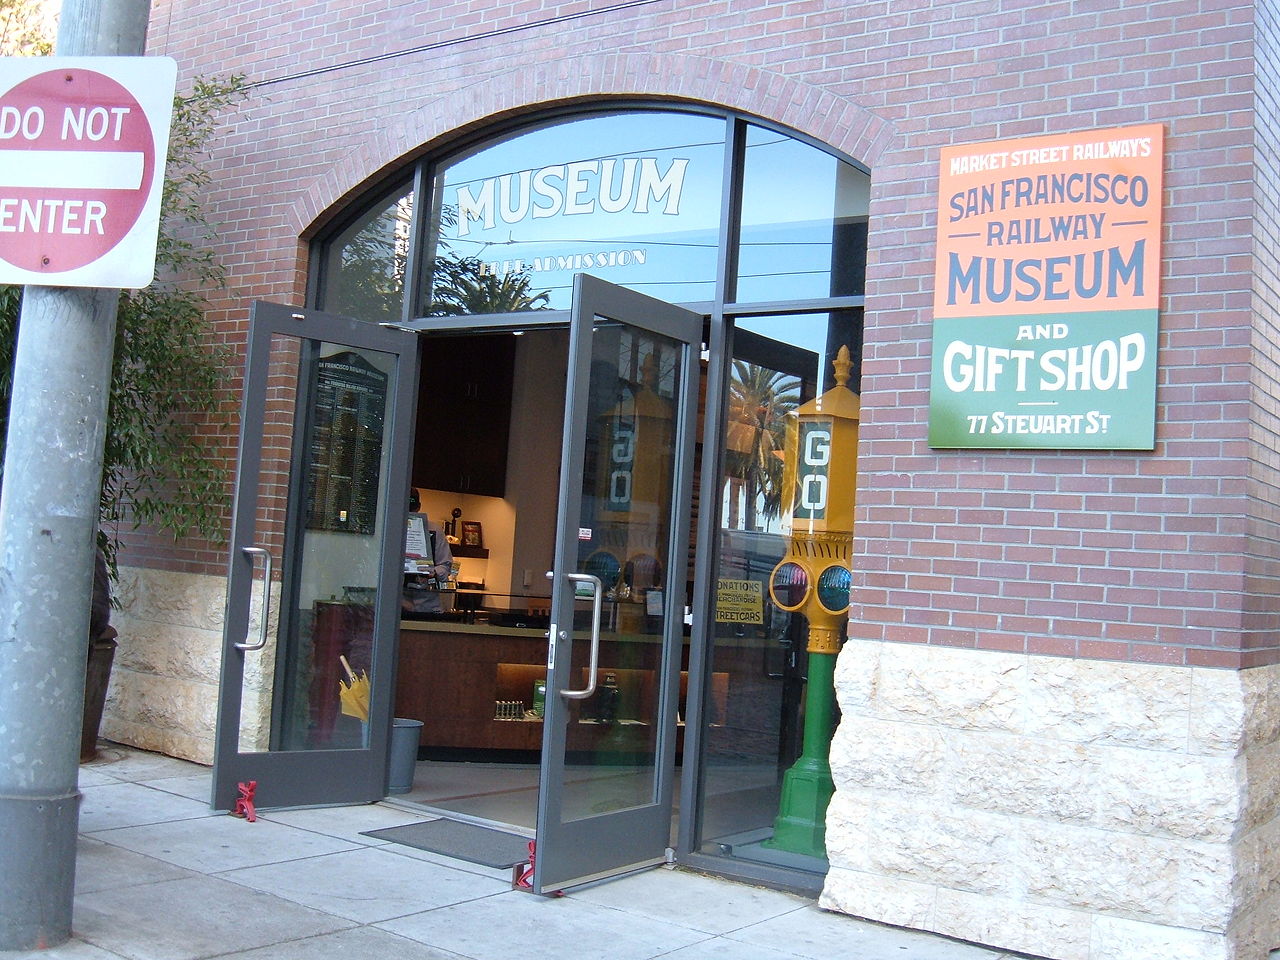 SAN FRANCISCO RAILWAY MUSEUM